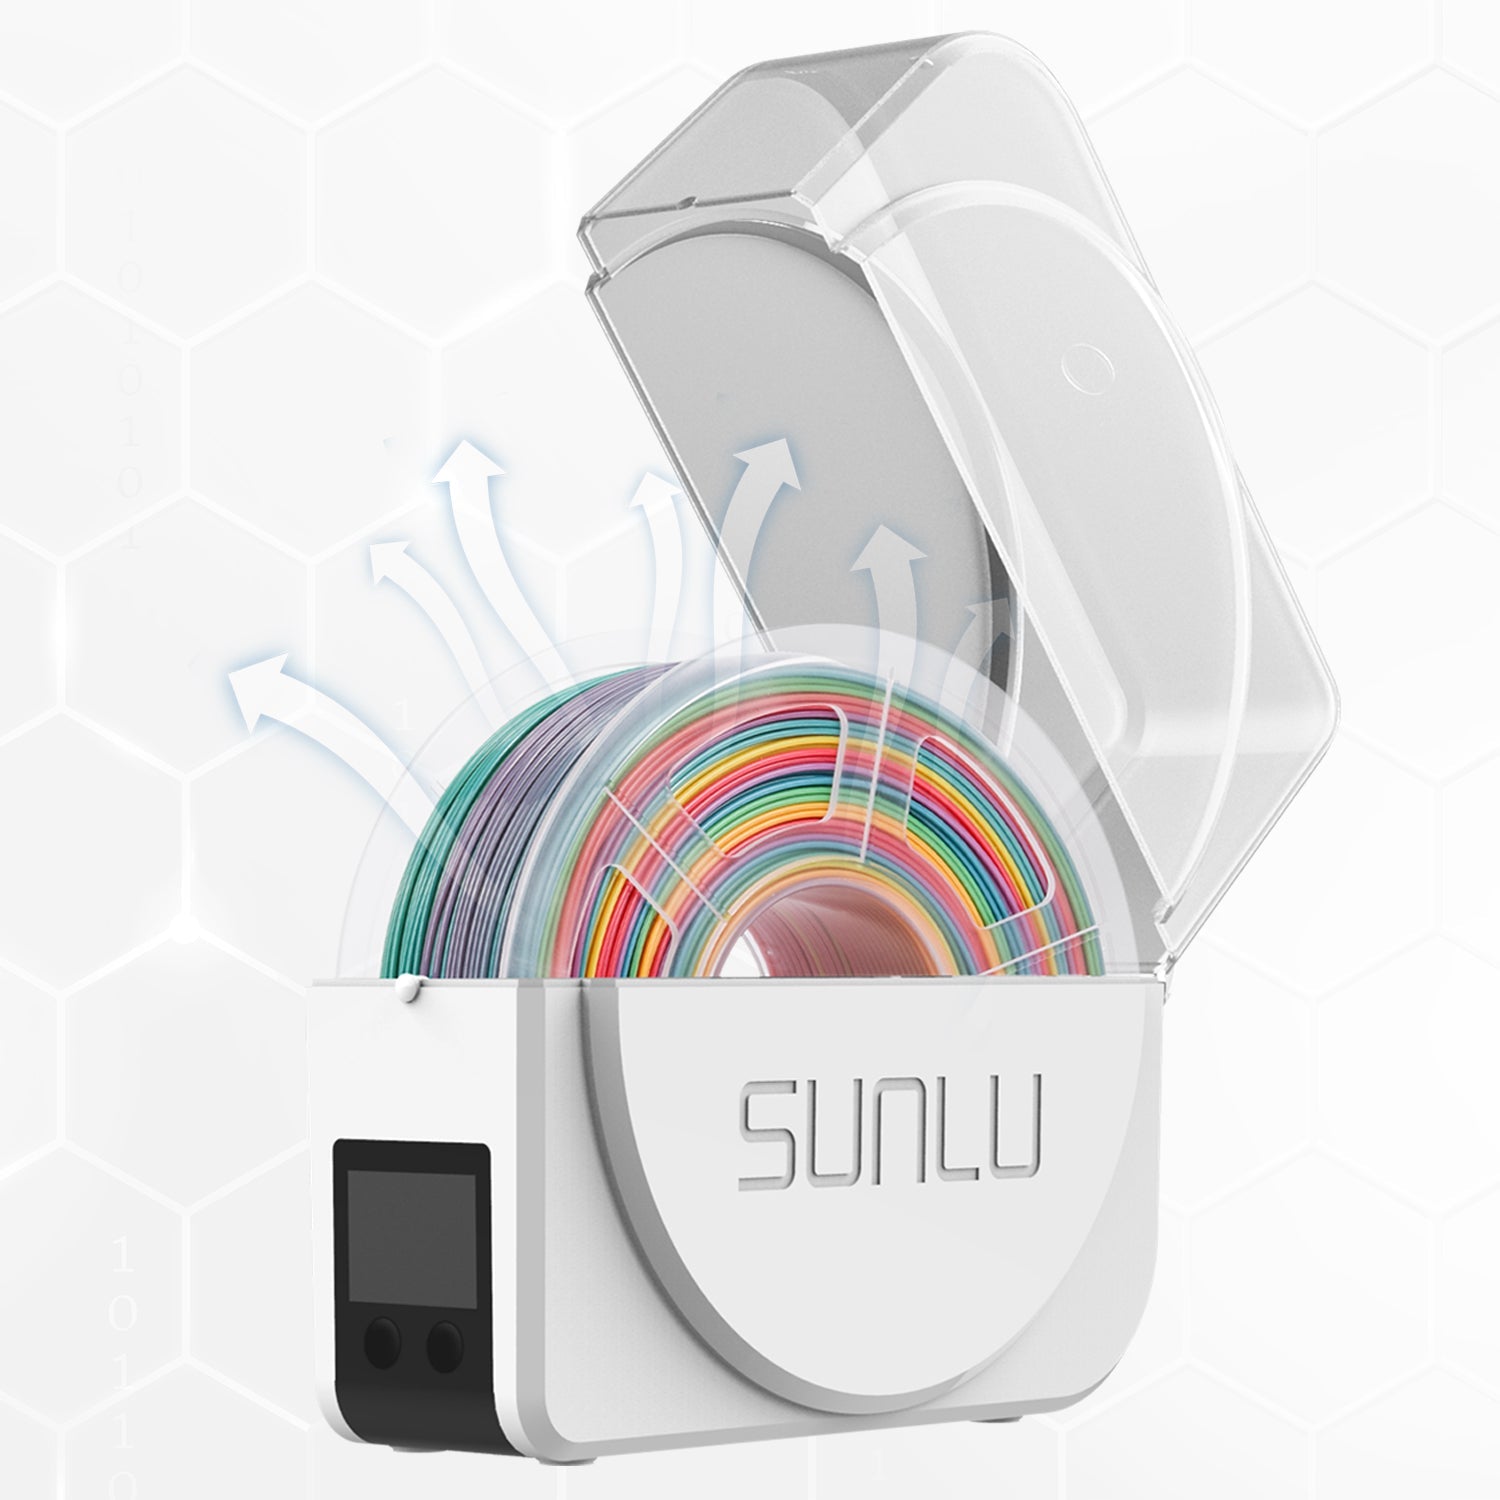 SUNLU TPU Filament 1.75mm Flexible 3D Printer India